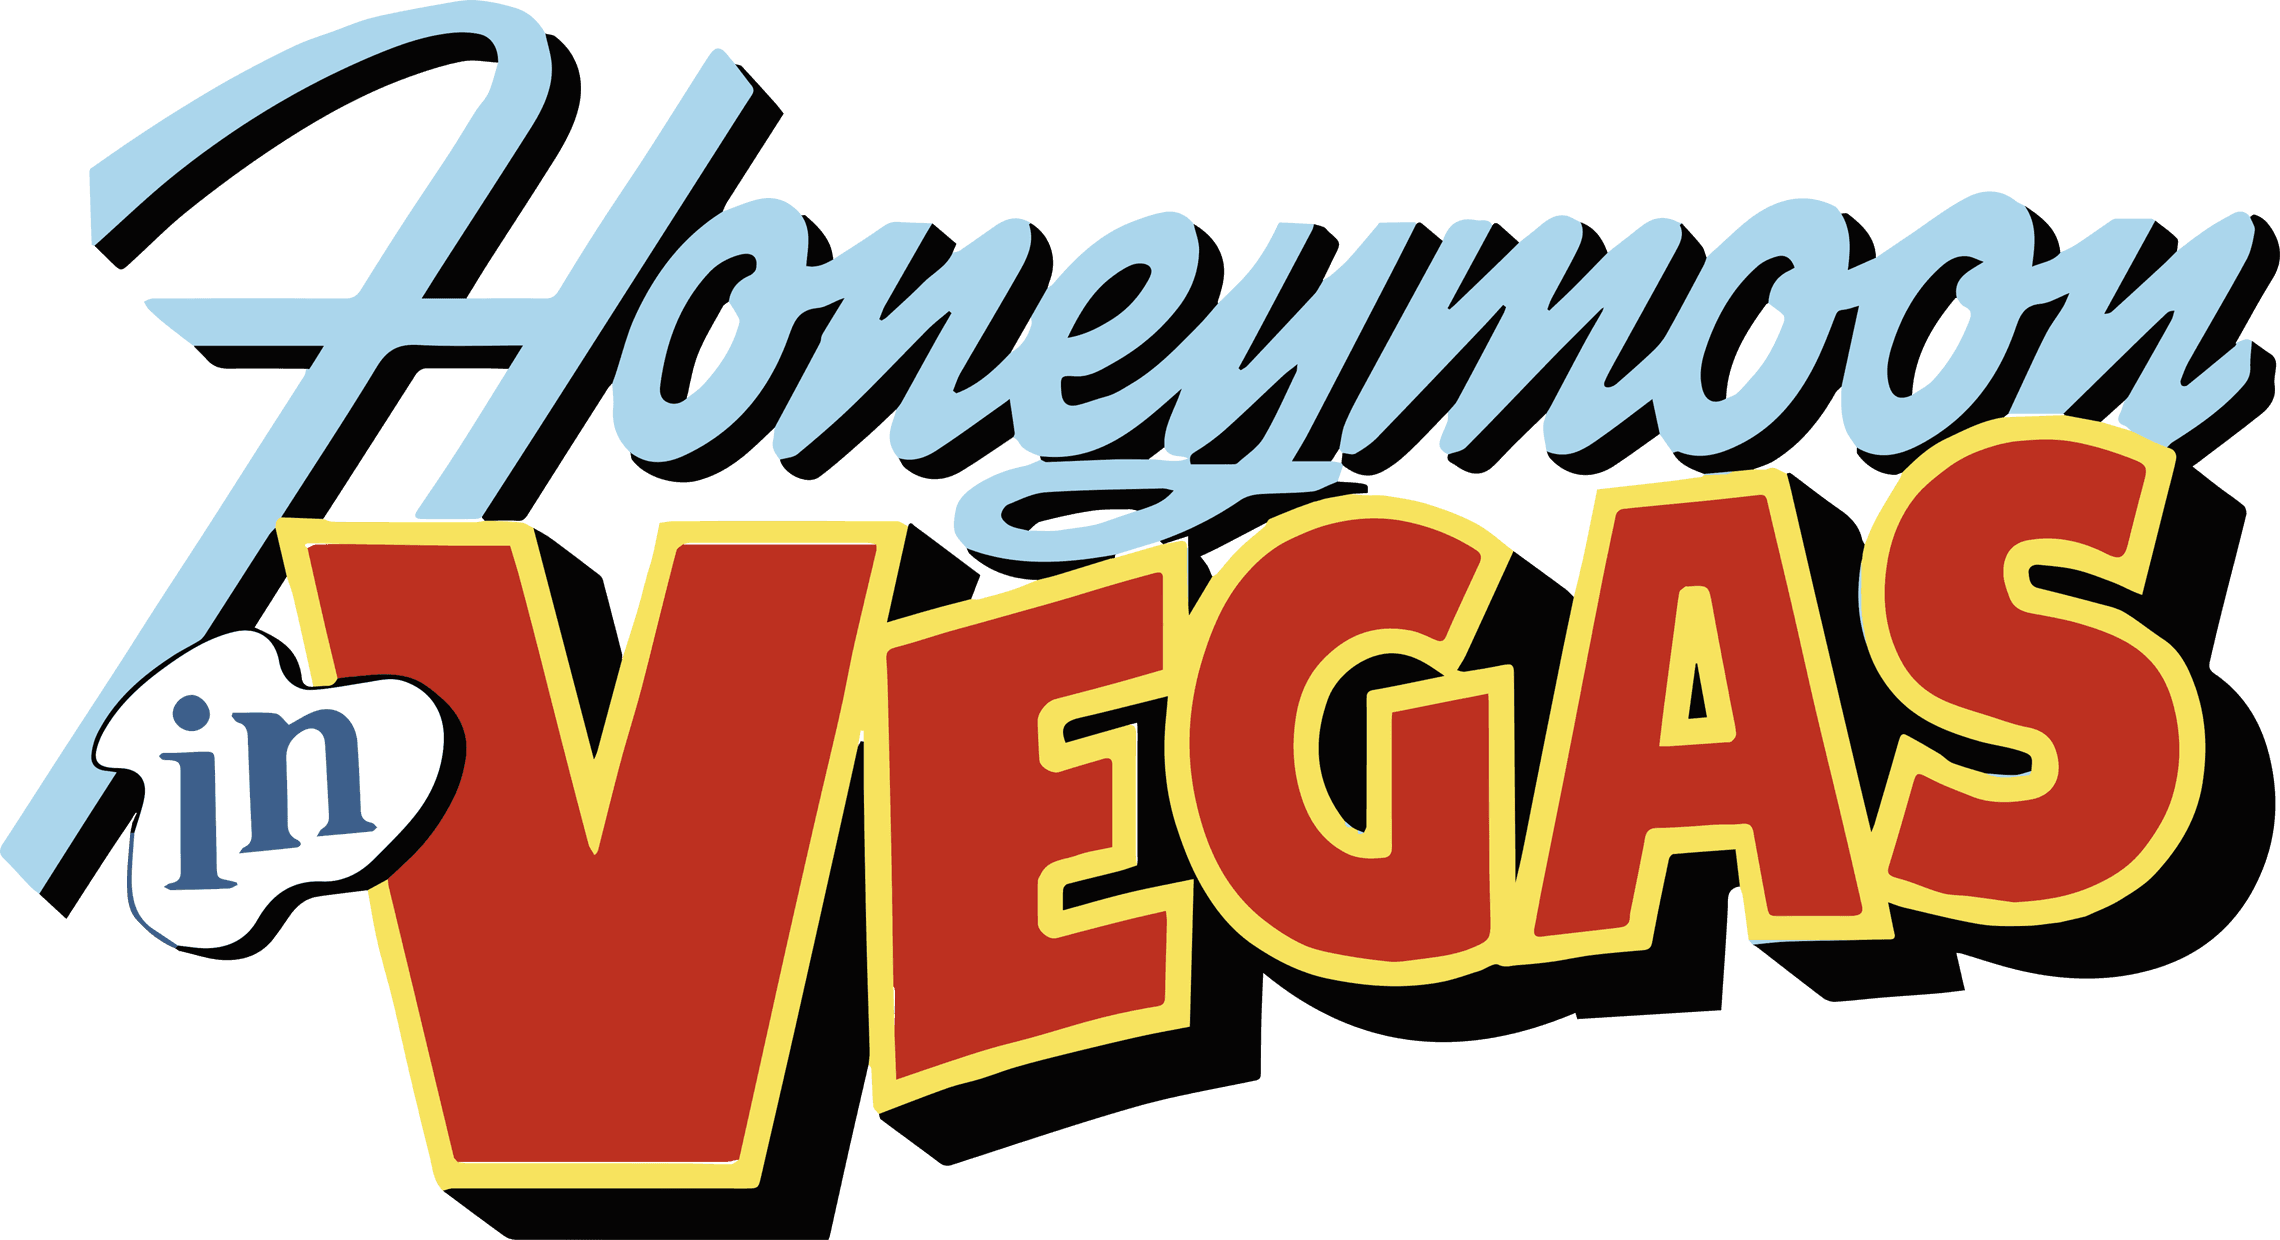 Honeymoon in Vegas logo